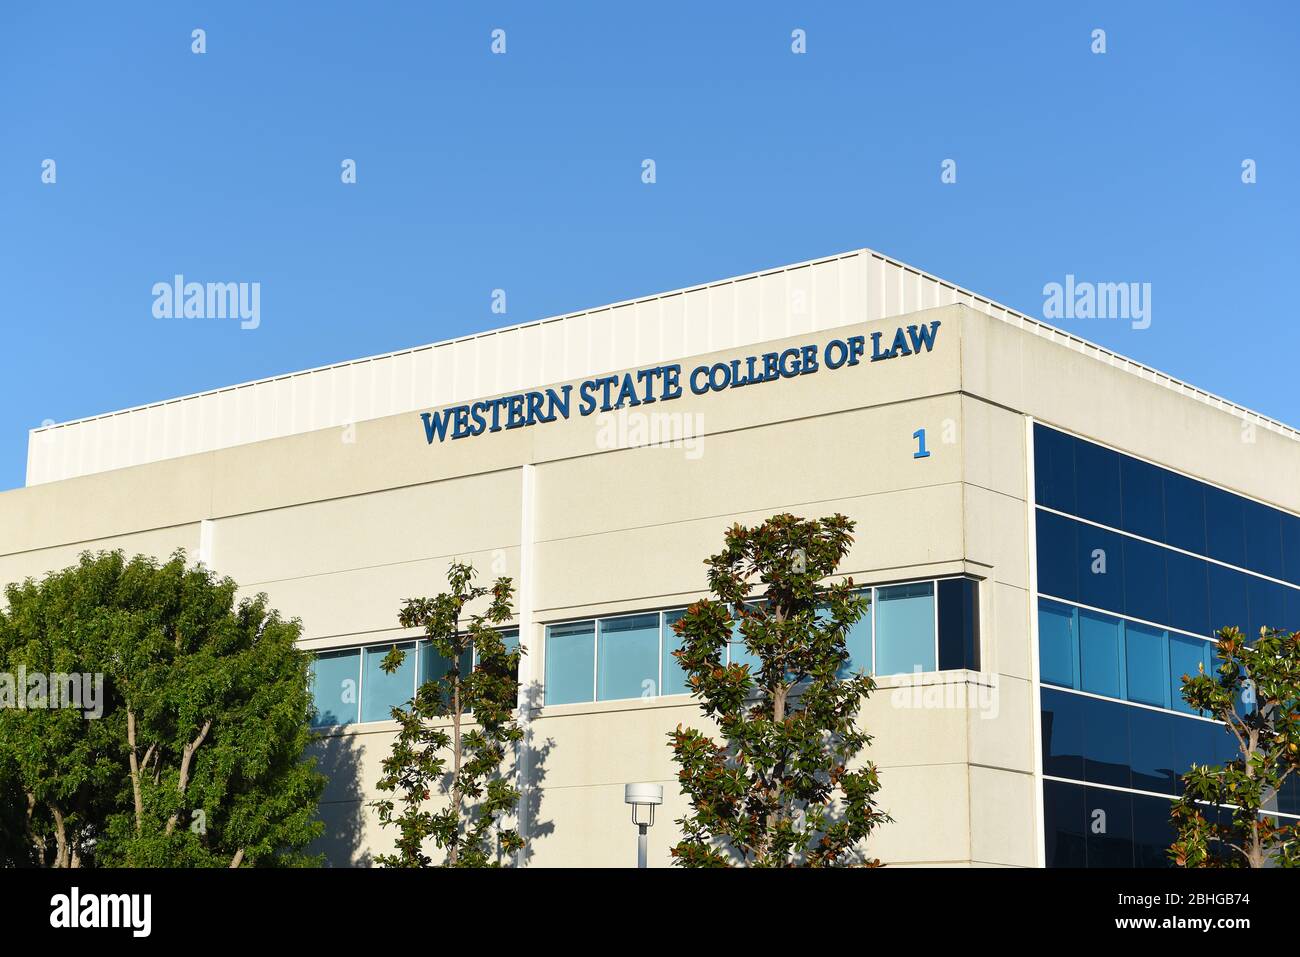 IRVINE, CALIFORNIE - 25 AVRIL 2020: Fermeture du Western State College of Law, bâtiment du campus d'Irvine. Banque D'Images